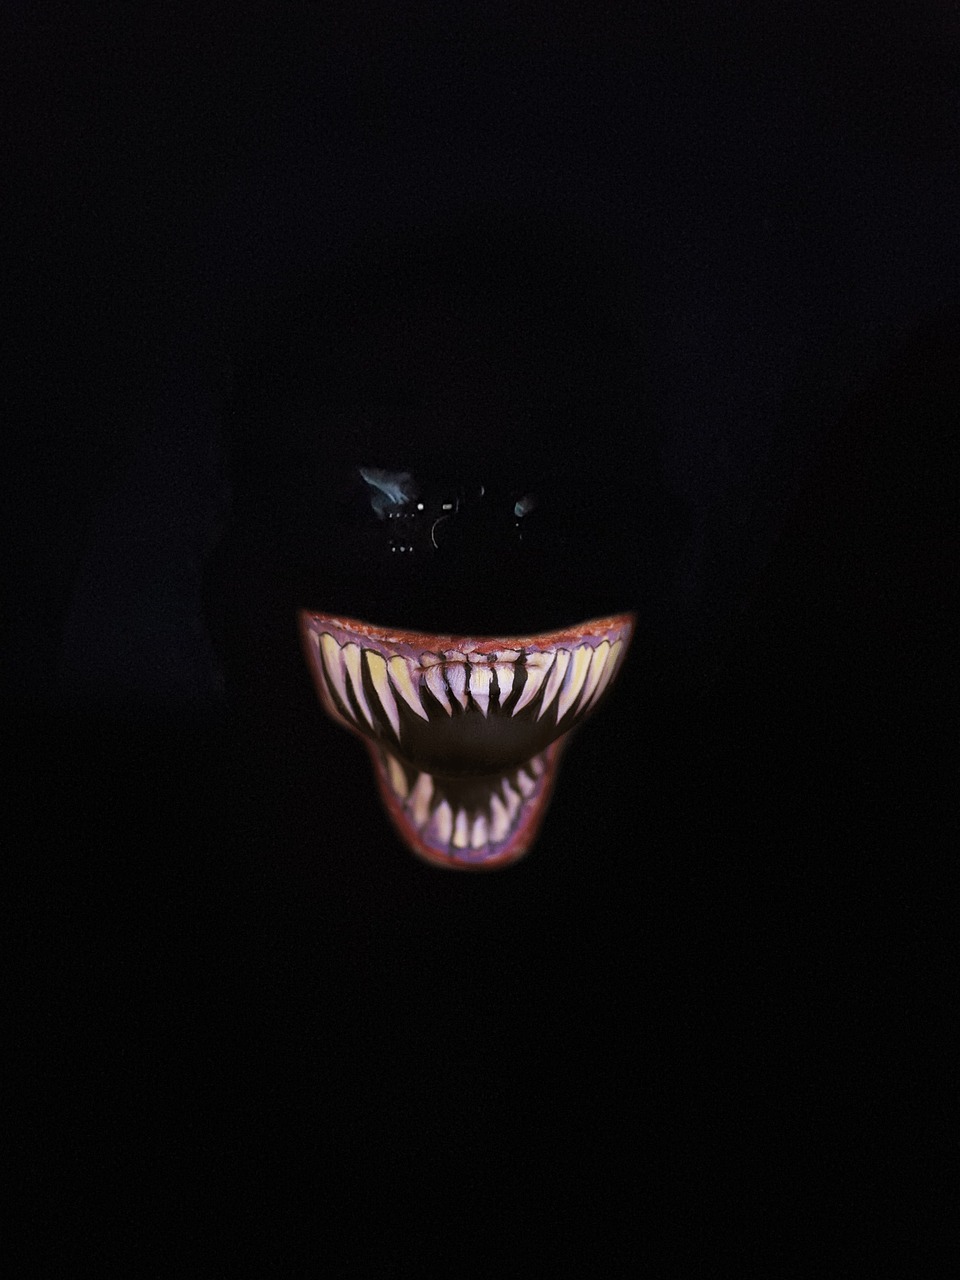 A dark monster that is all teeth